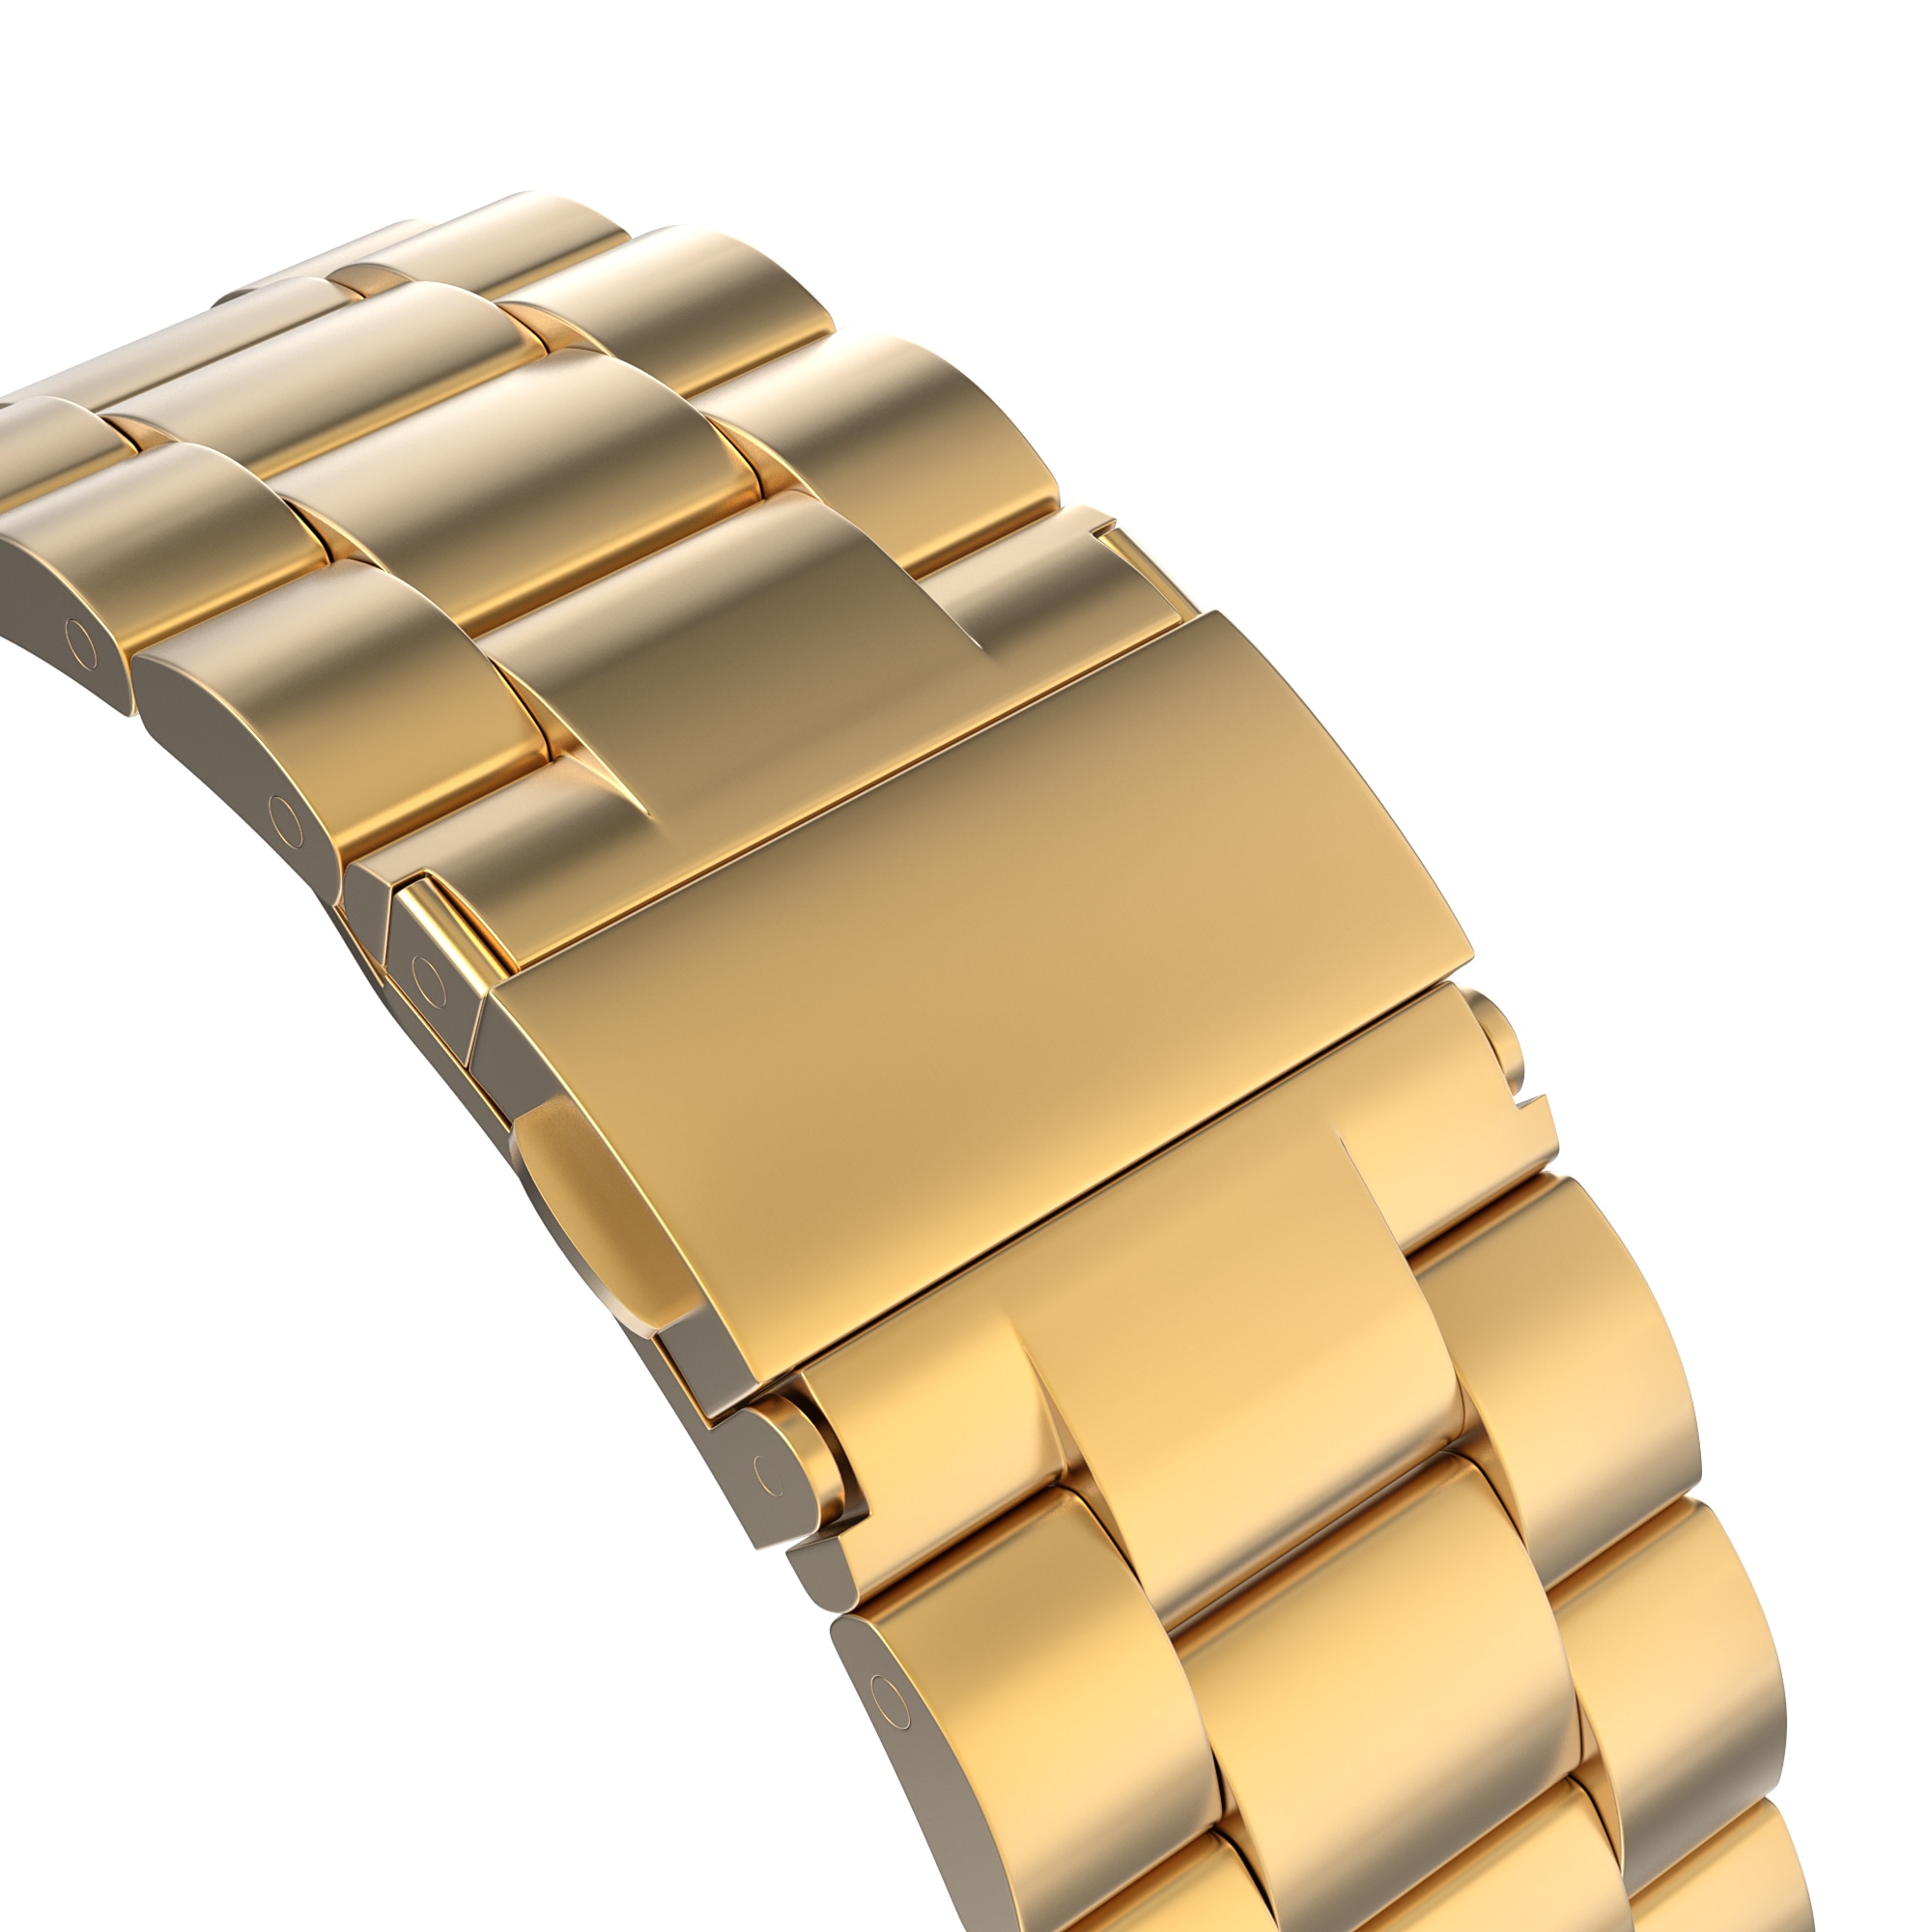 Apple Watch SE 44mm Armband aus Stahl gold